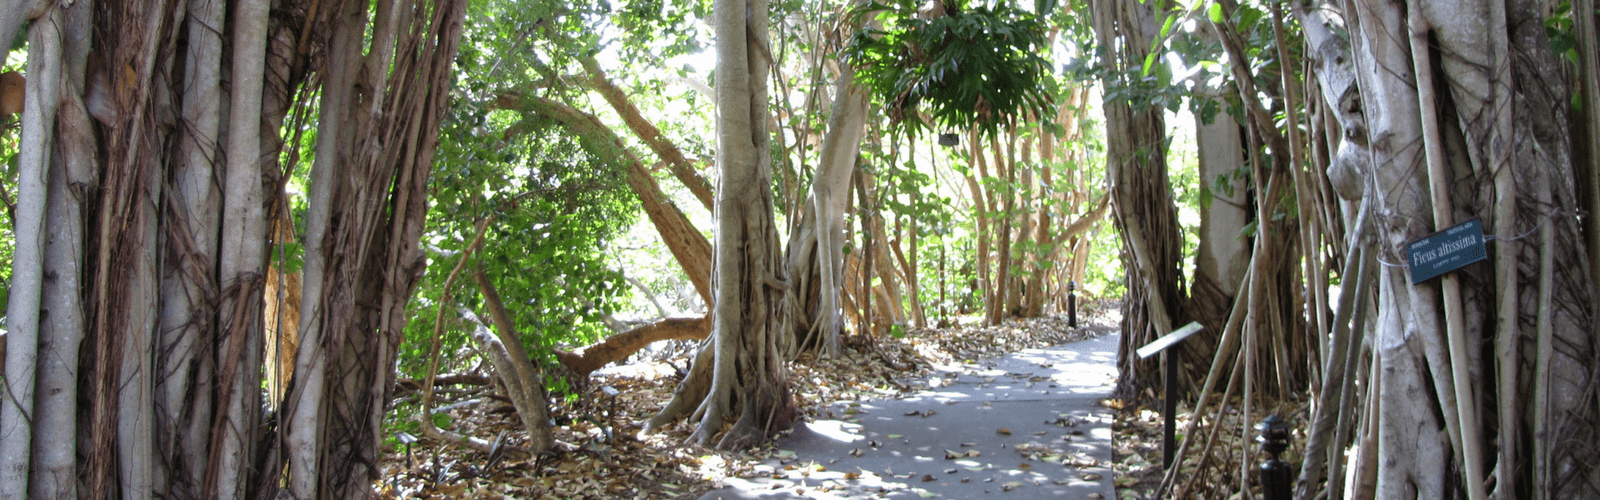 Selby Botanical Gardens in Sarasota, nature in Sarasota